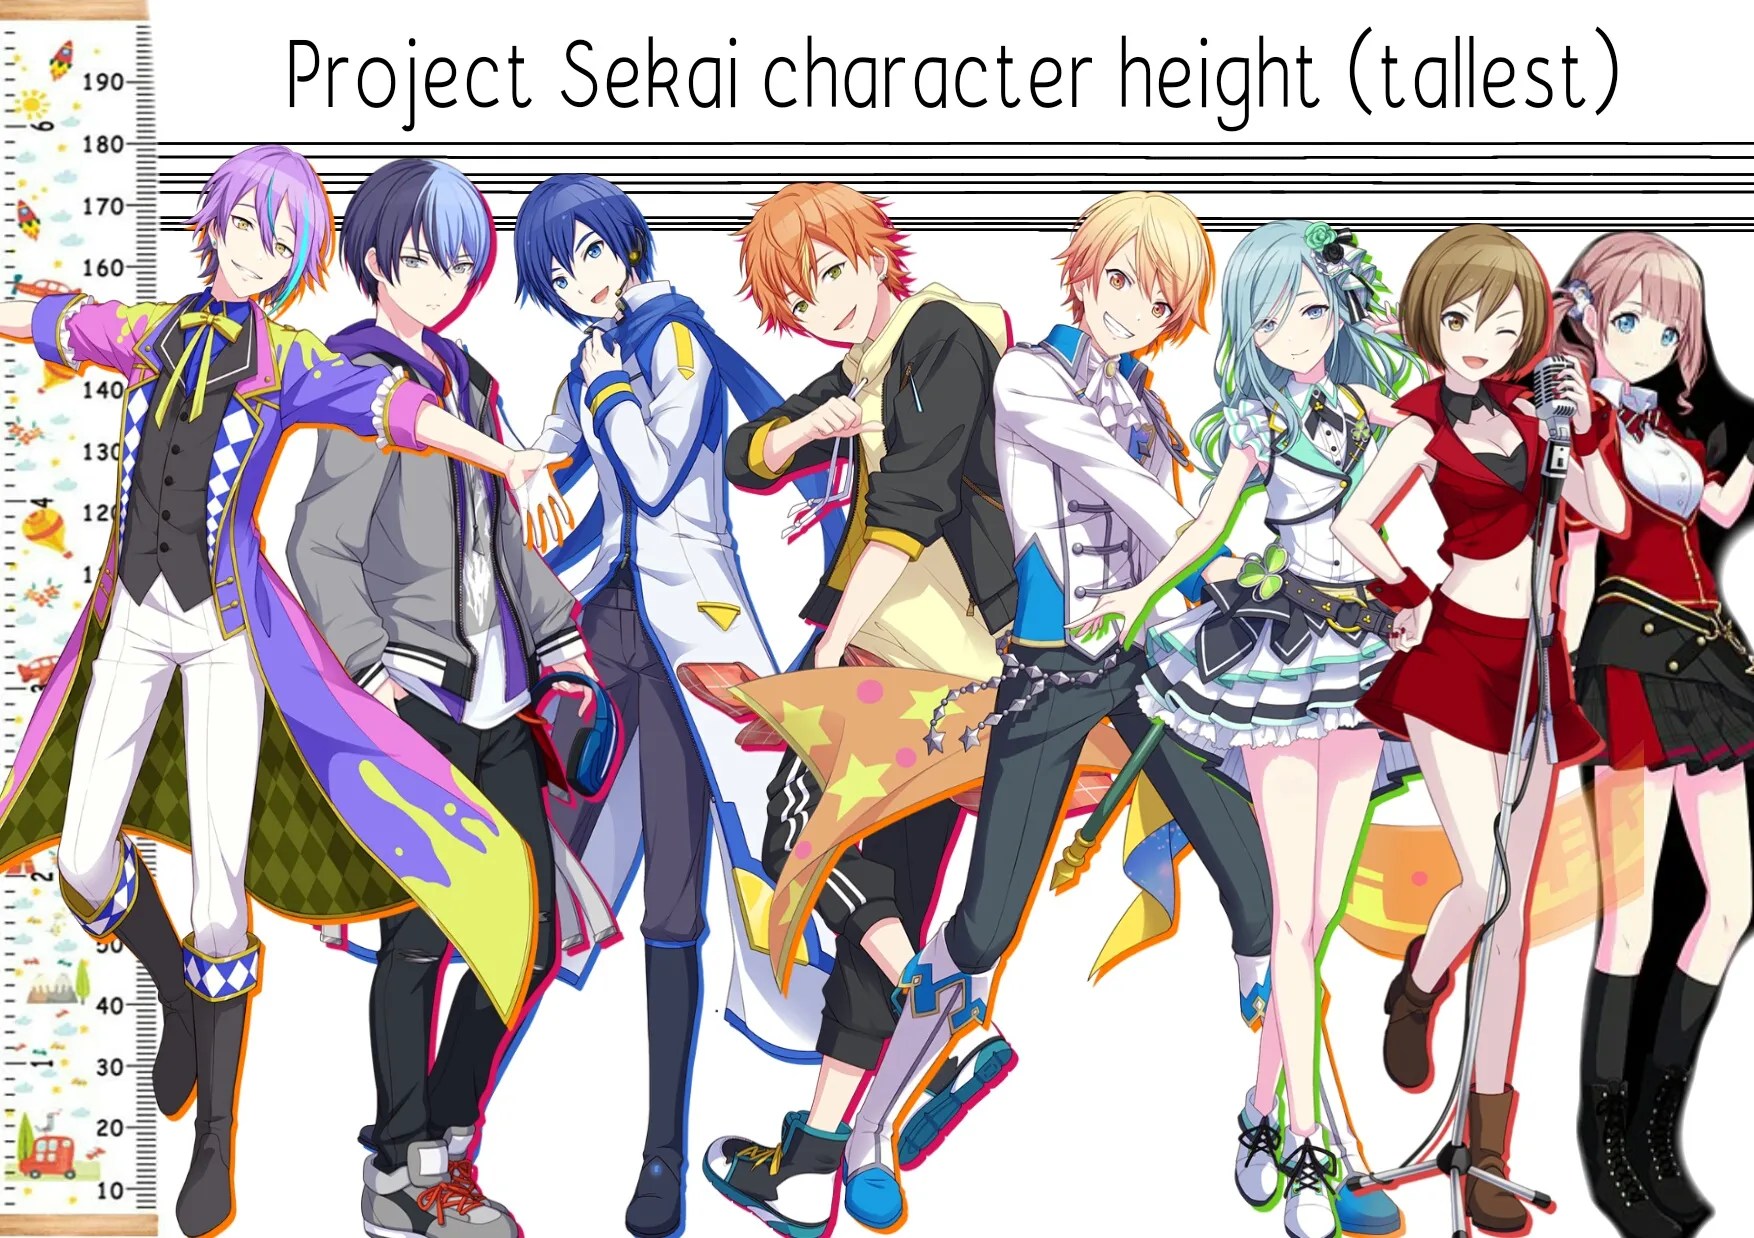 Project Sekai characters